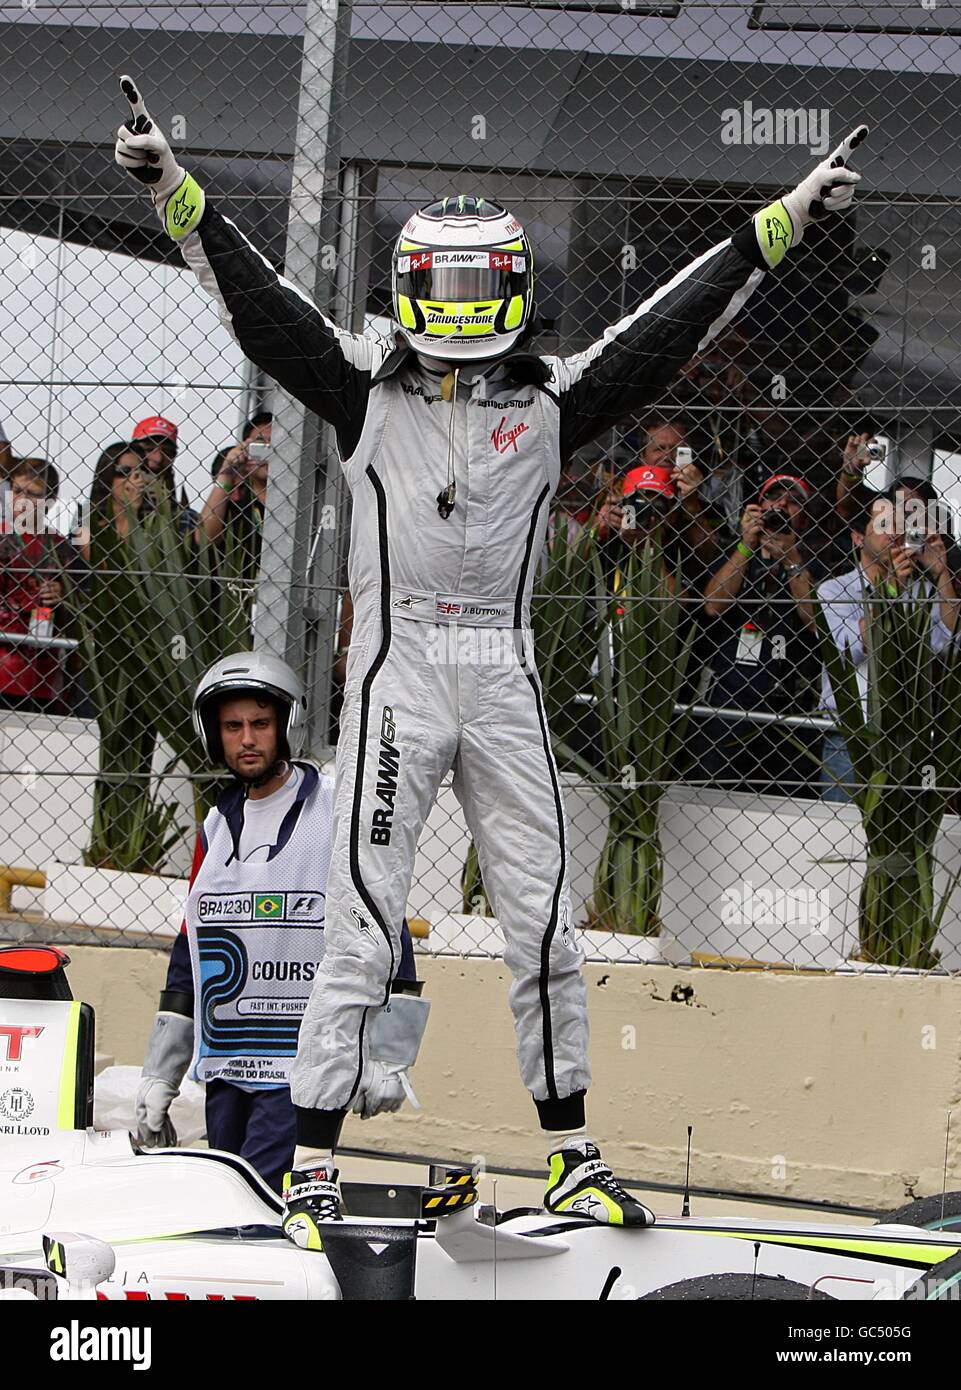 Underholde pint Manhattan Brawn GP's Jenson Button celebrates after winning the World Championship at  the Brazilian Grand Prix at Interlagos, Sao Paulo Stock Photo - Alamy